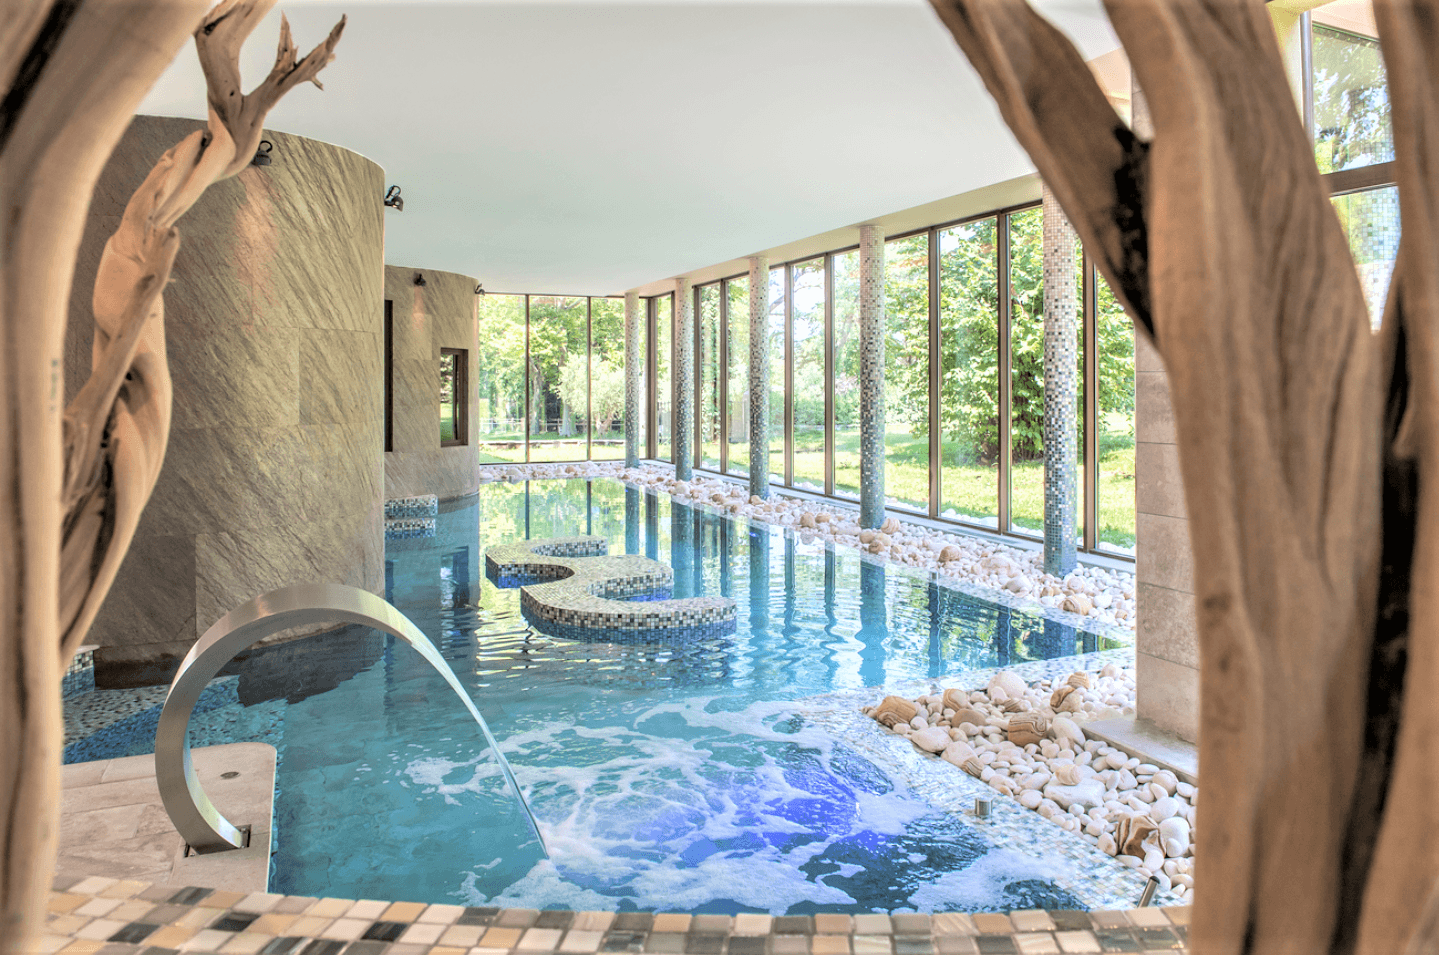 Luxury hotel in Provence, France - Château de Massillan 5* - Chef Mickael Furnion - Michelin-starred restaurant Le M- swimming pool